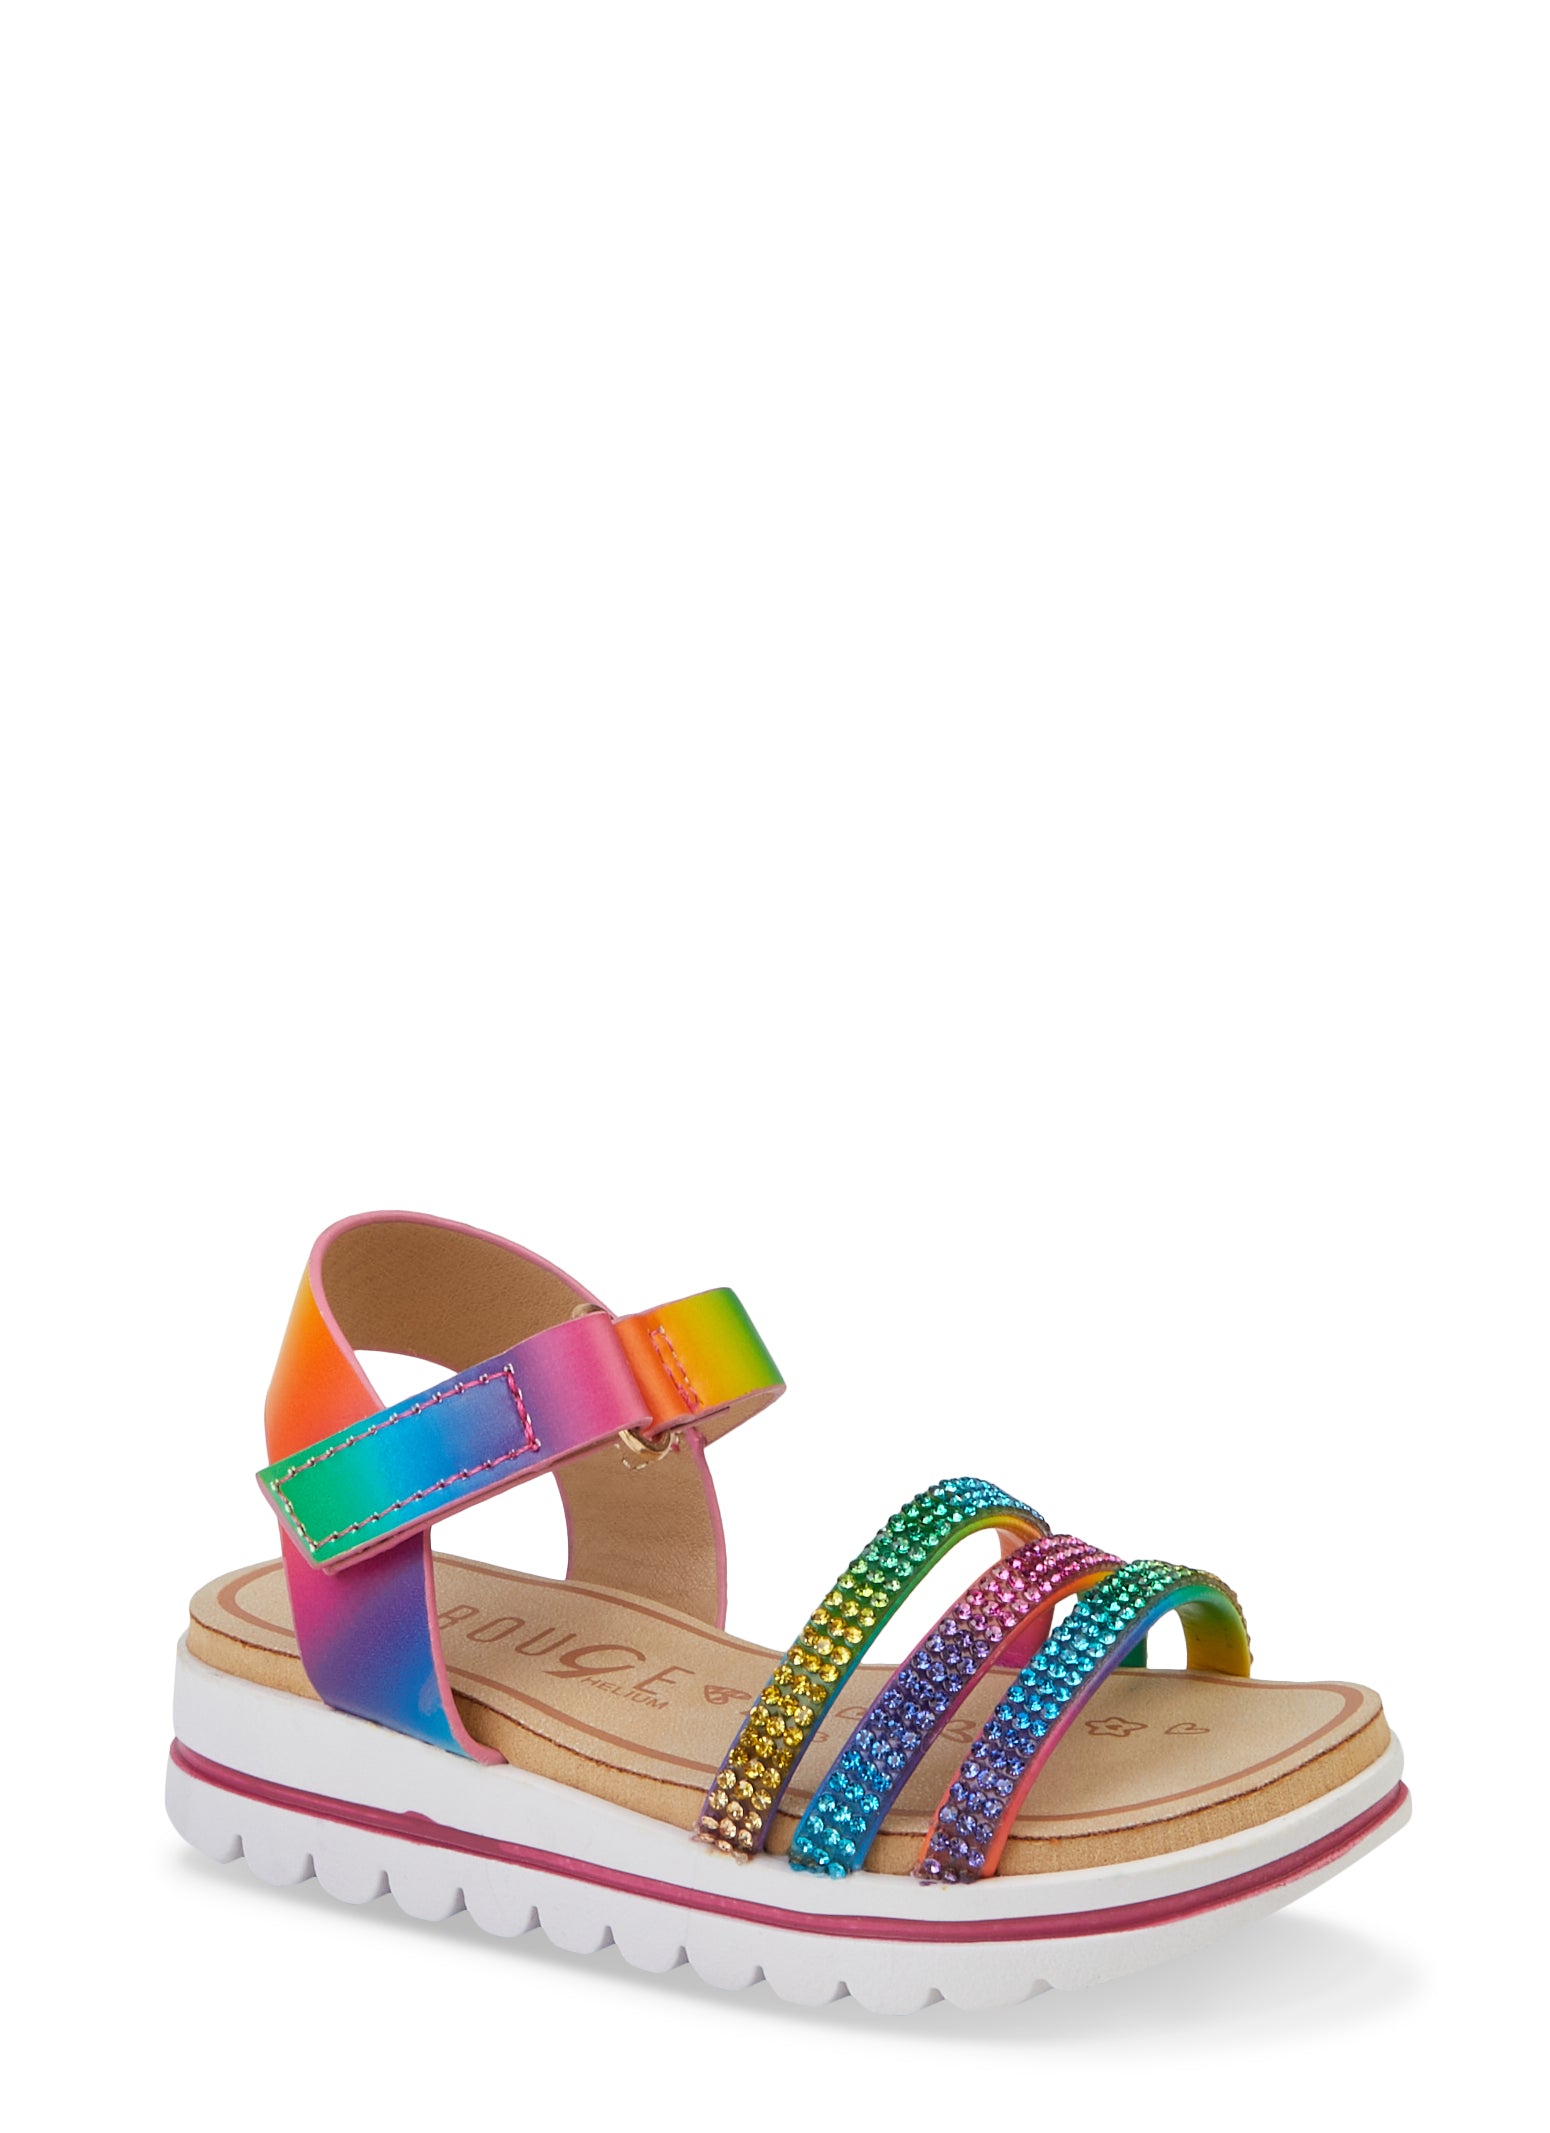 Womens Toddler Girls Rainbow Rhinestone Velcro Sandals, Multi, Size 8